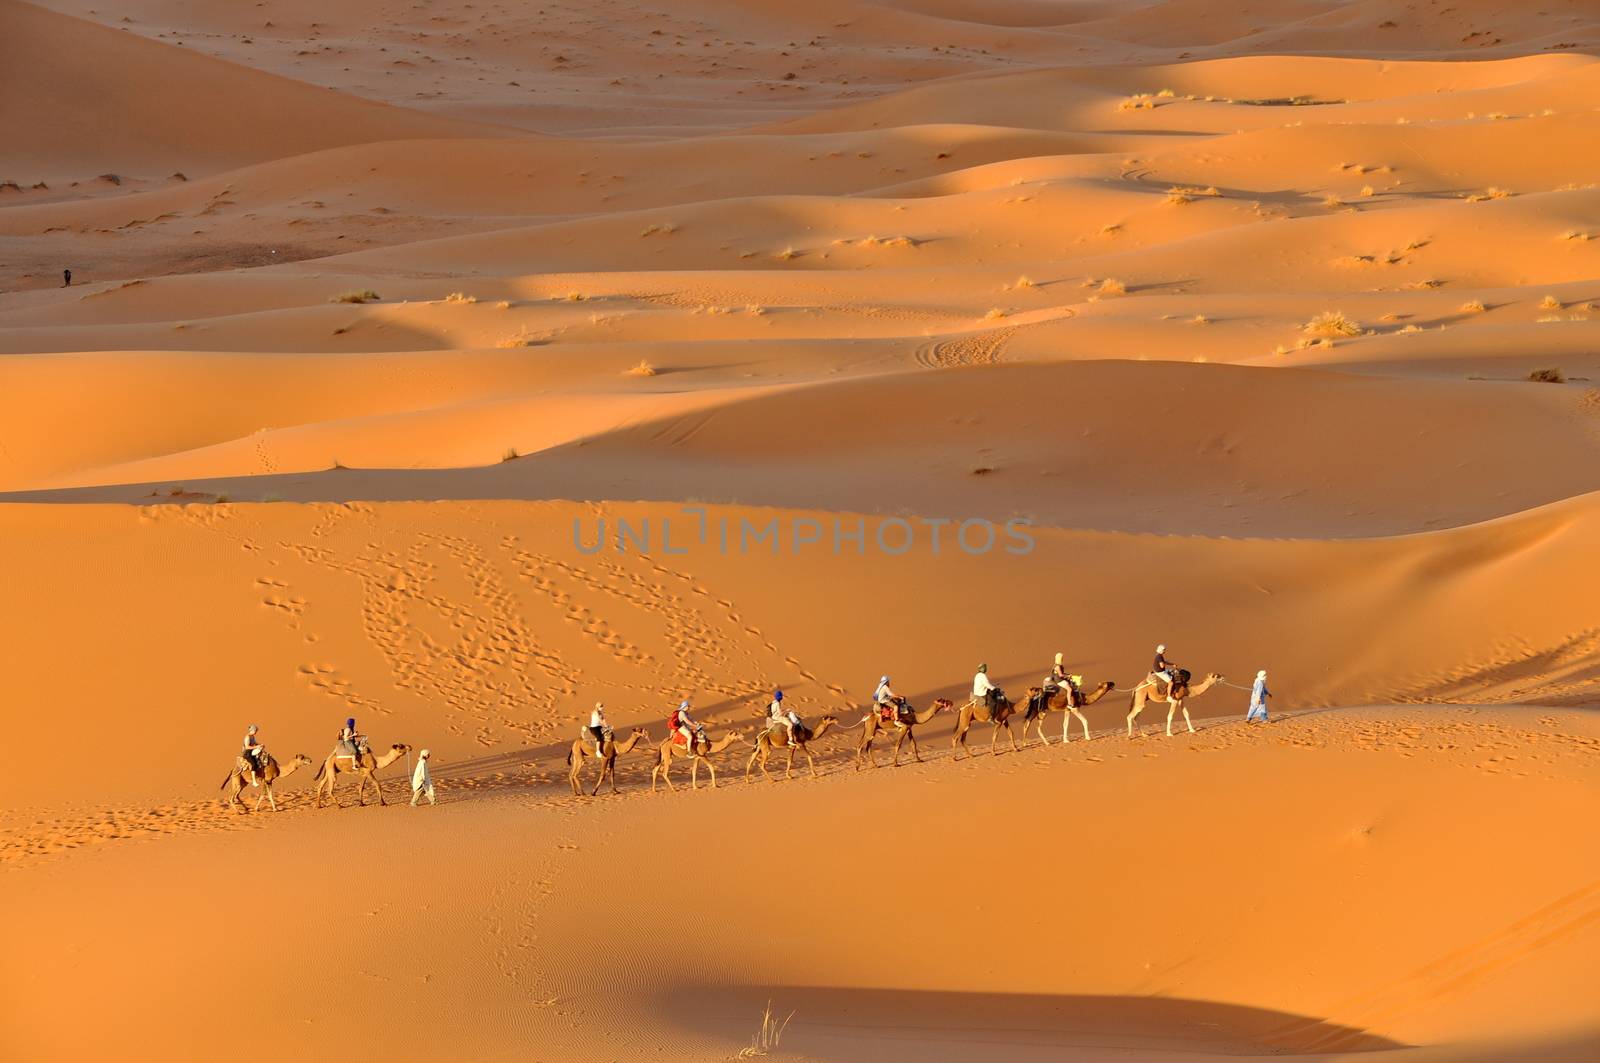 Camel caravan in Merzouga desert, Morocco by anderm